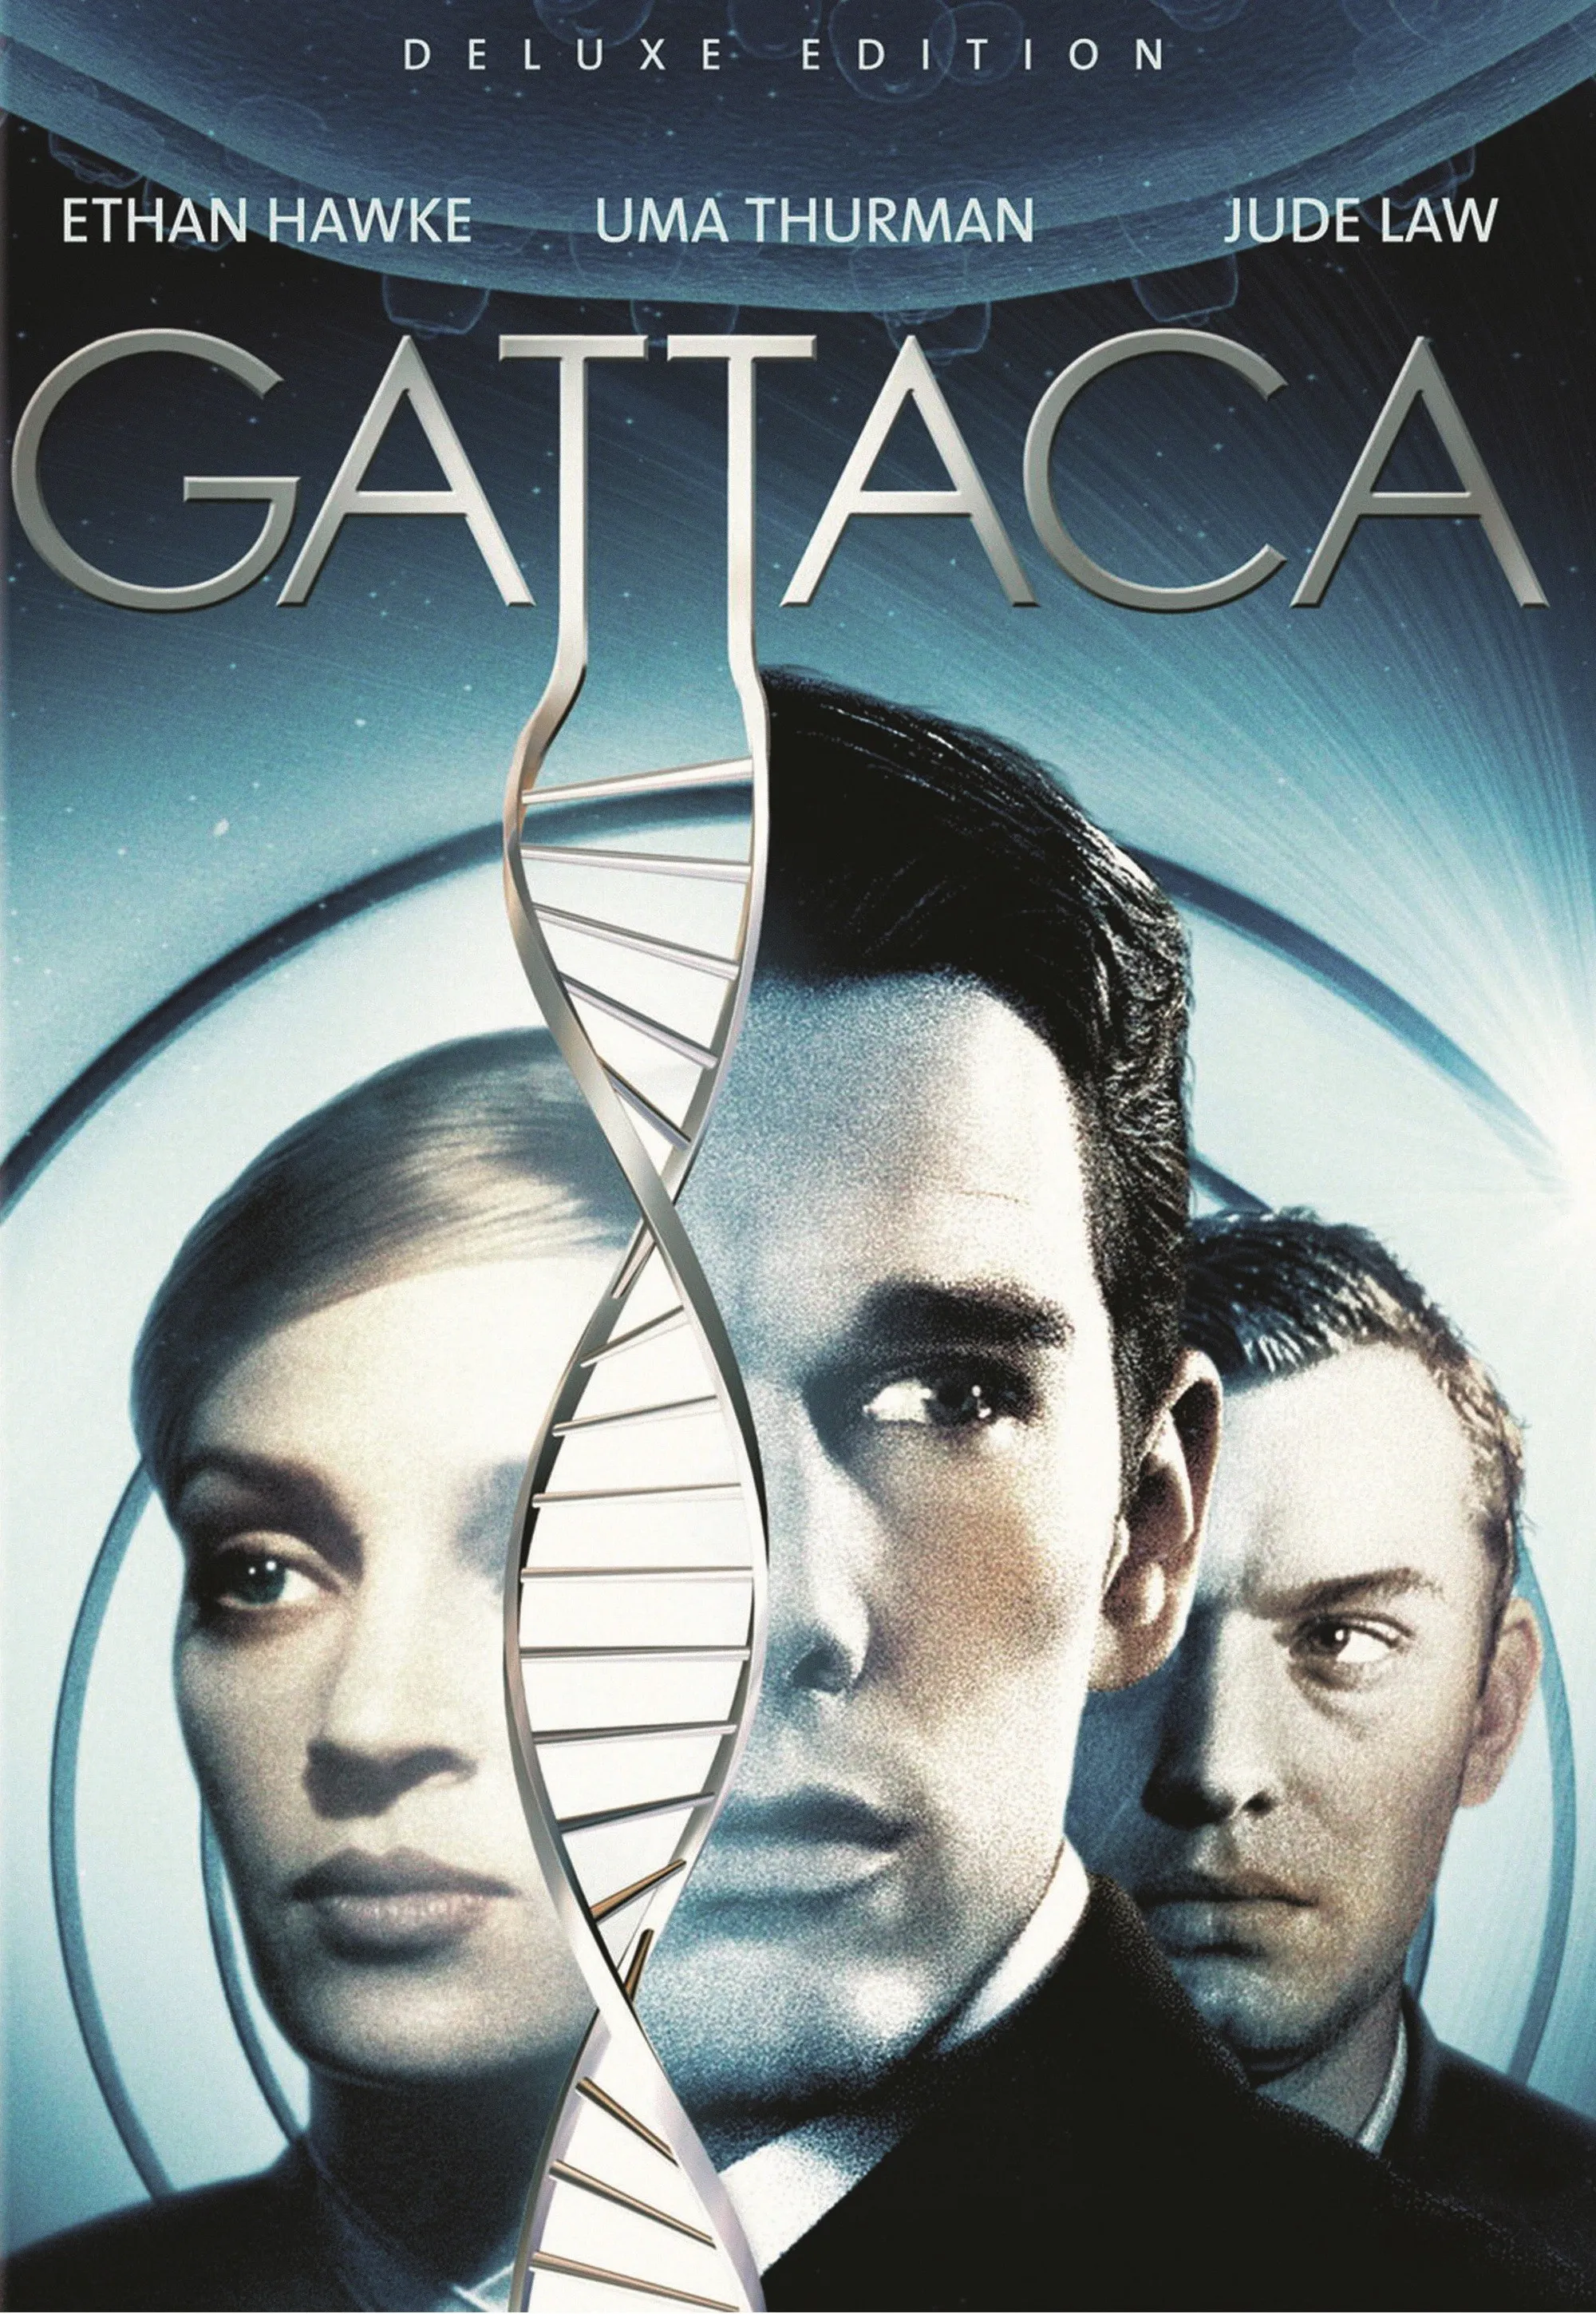 Gattaca, by Andrew Nicol, 1997.